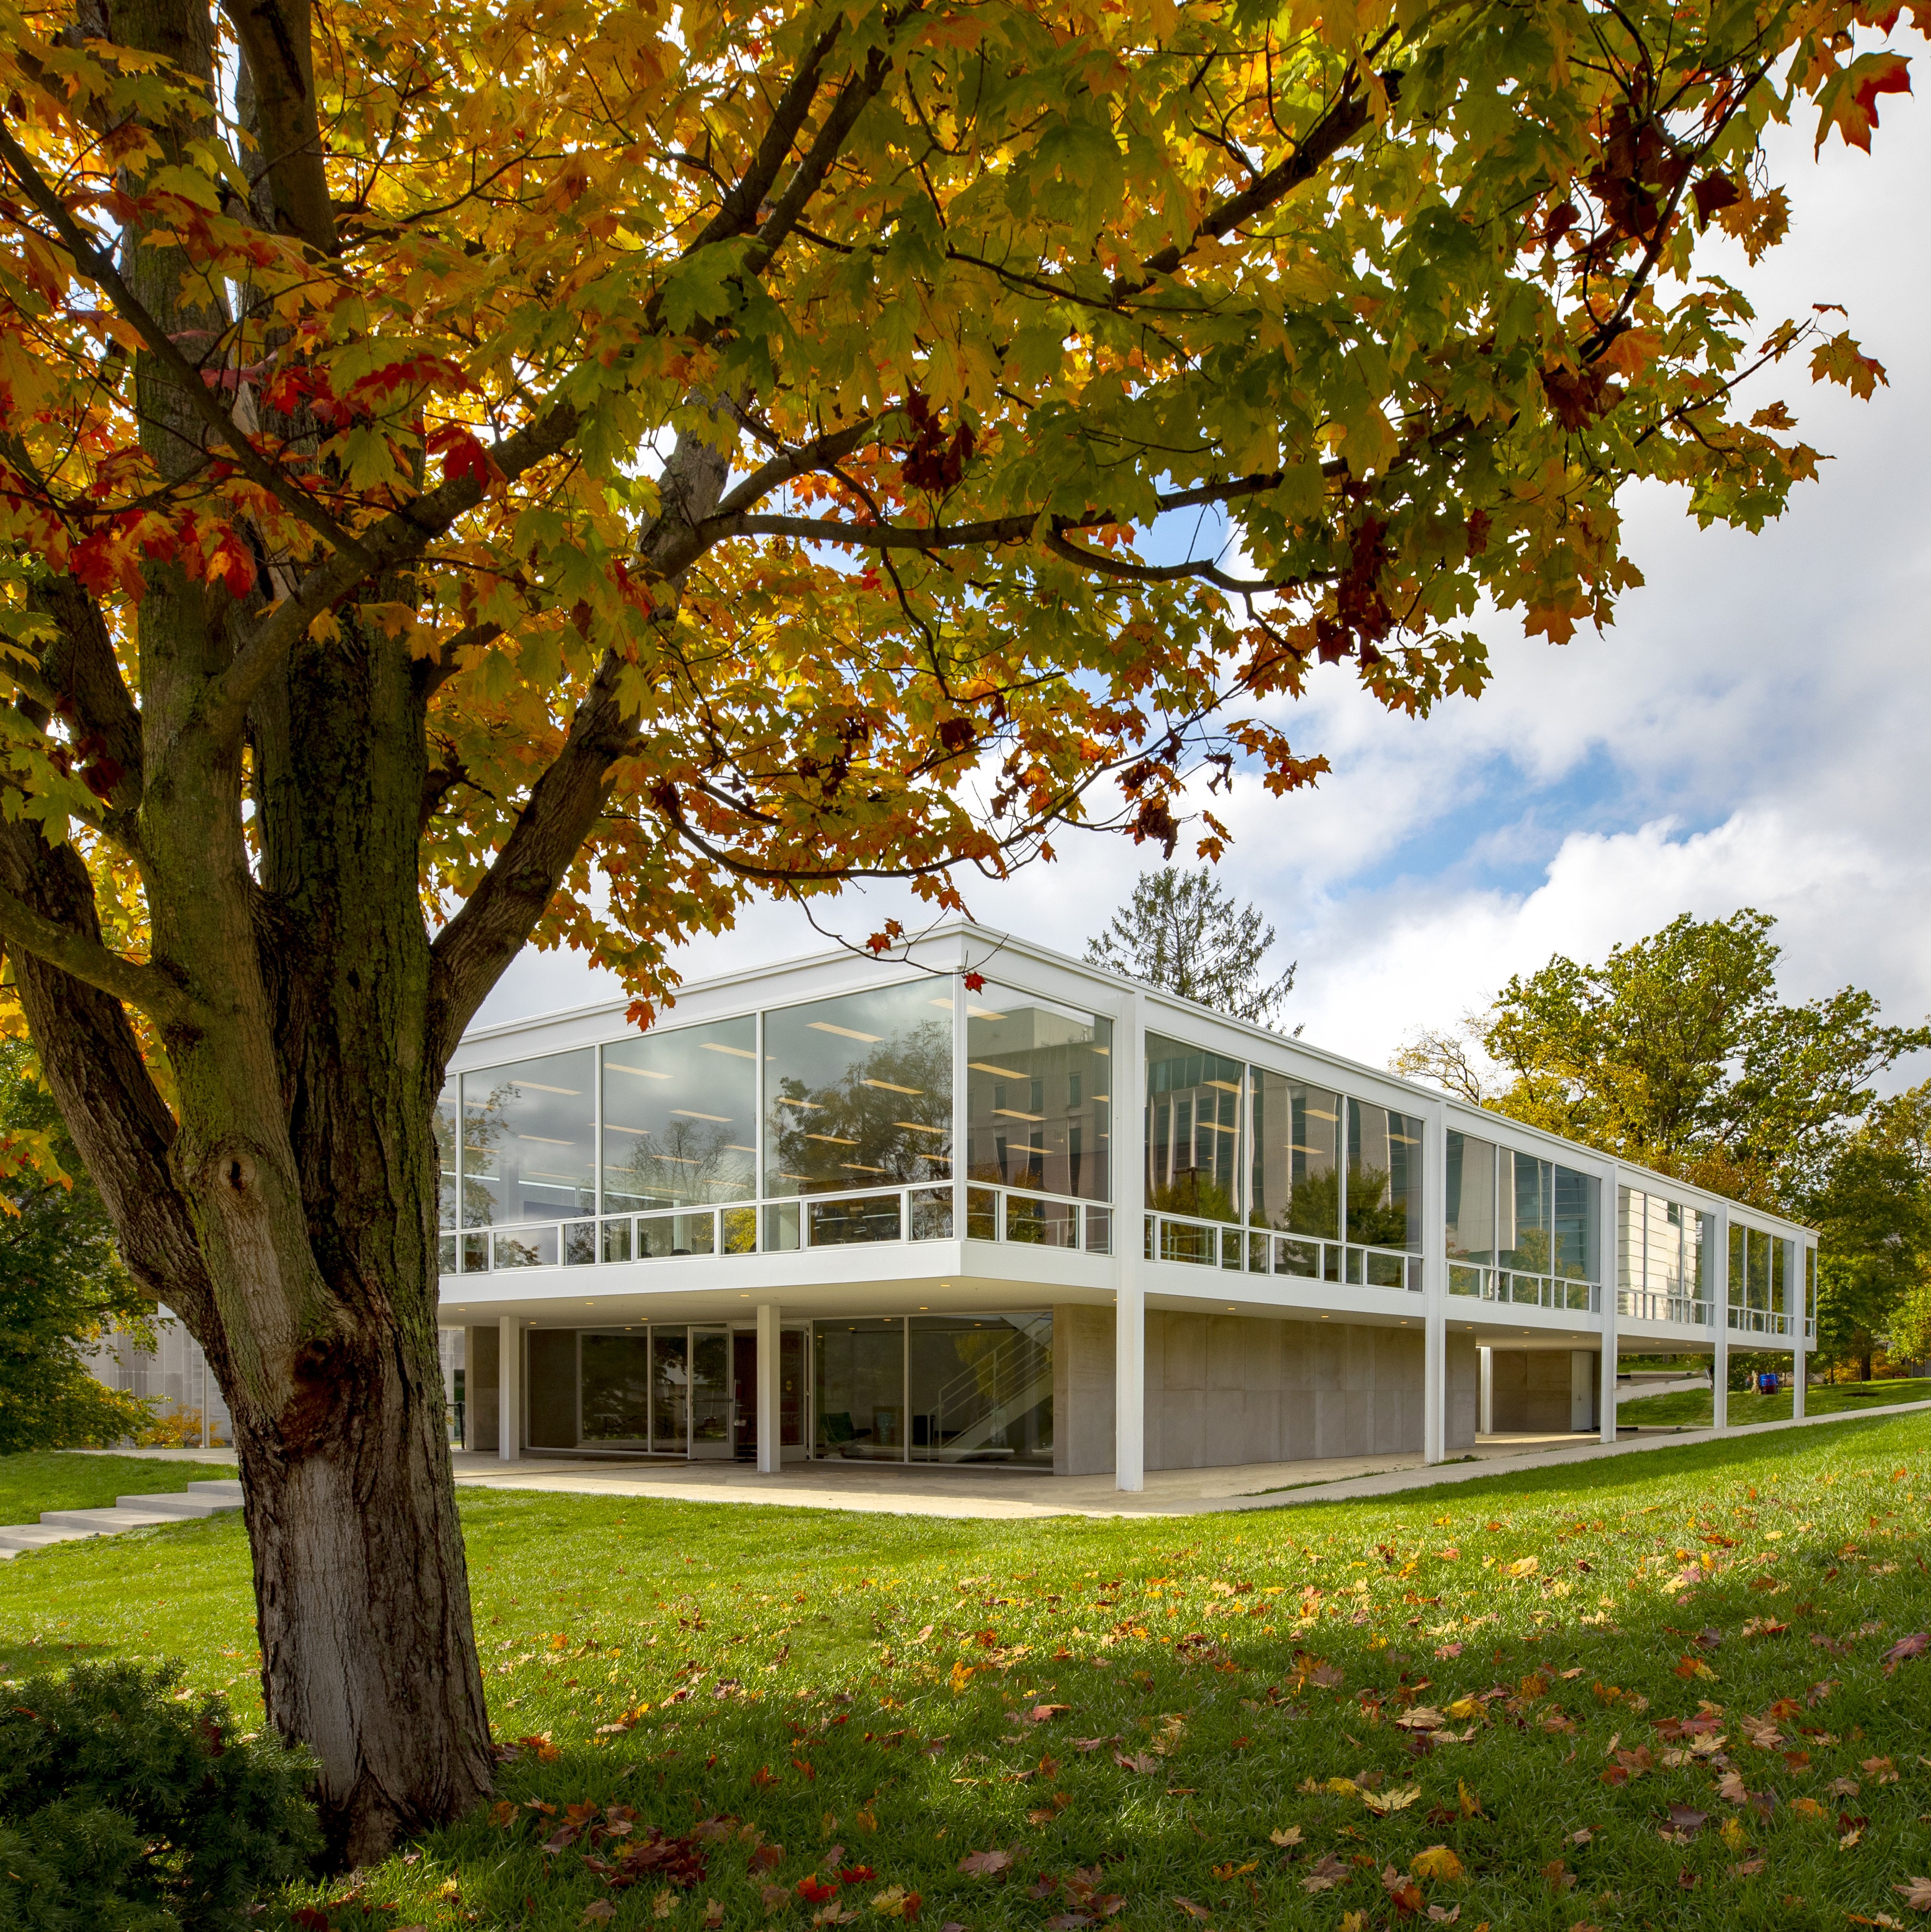 Projeto redescoberto de Mies van der Rohe é inaugurado nos Estados Unidos (Foto: Divulgação/ Eskenazi School of Art, Architecture + Design, Indiana University © Hadley Fruits)